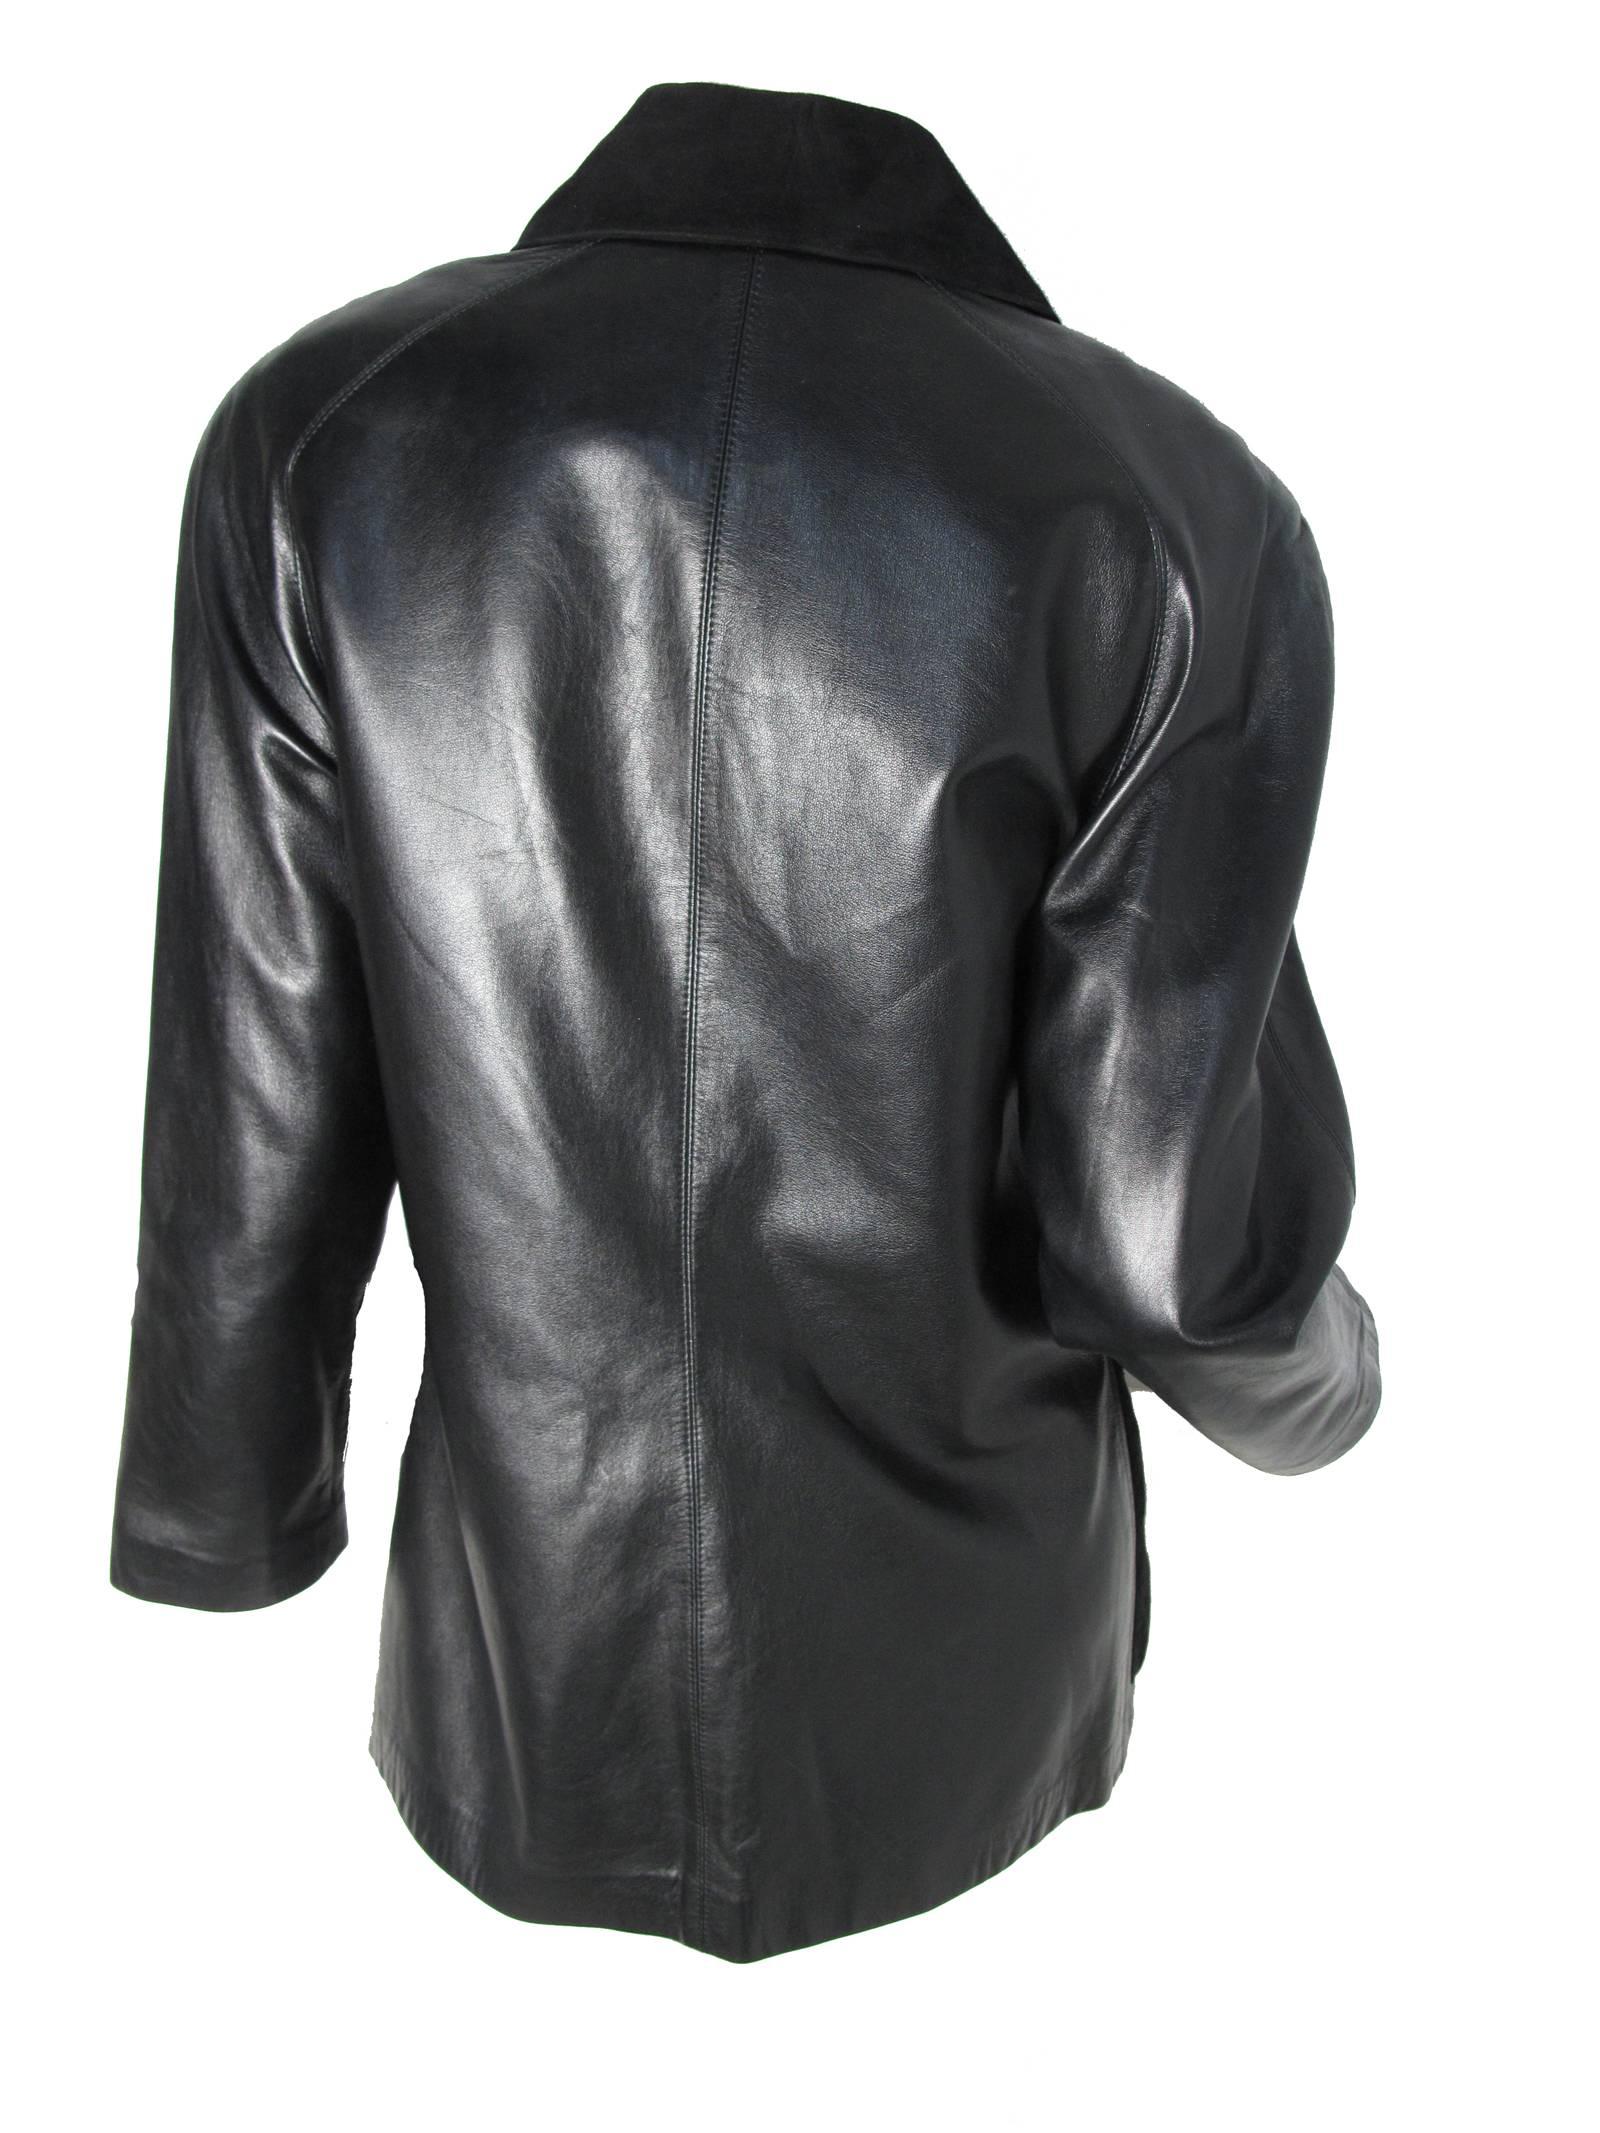 ysl burgundy leather jacket